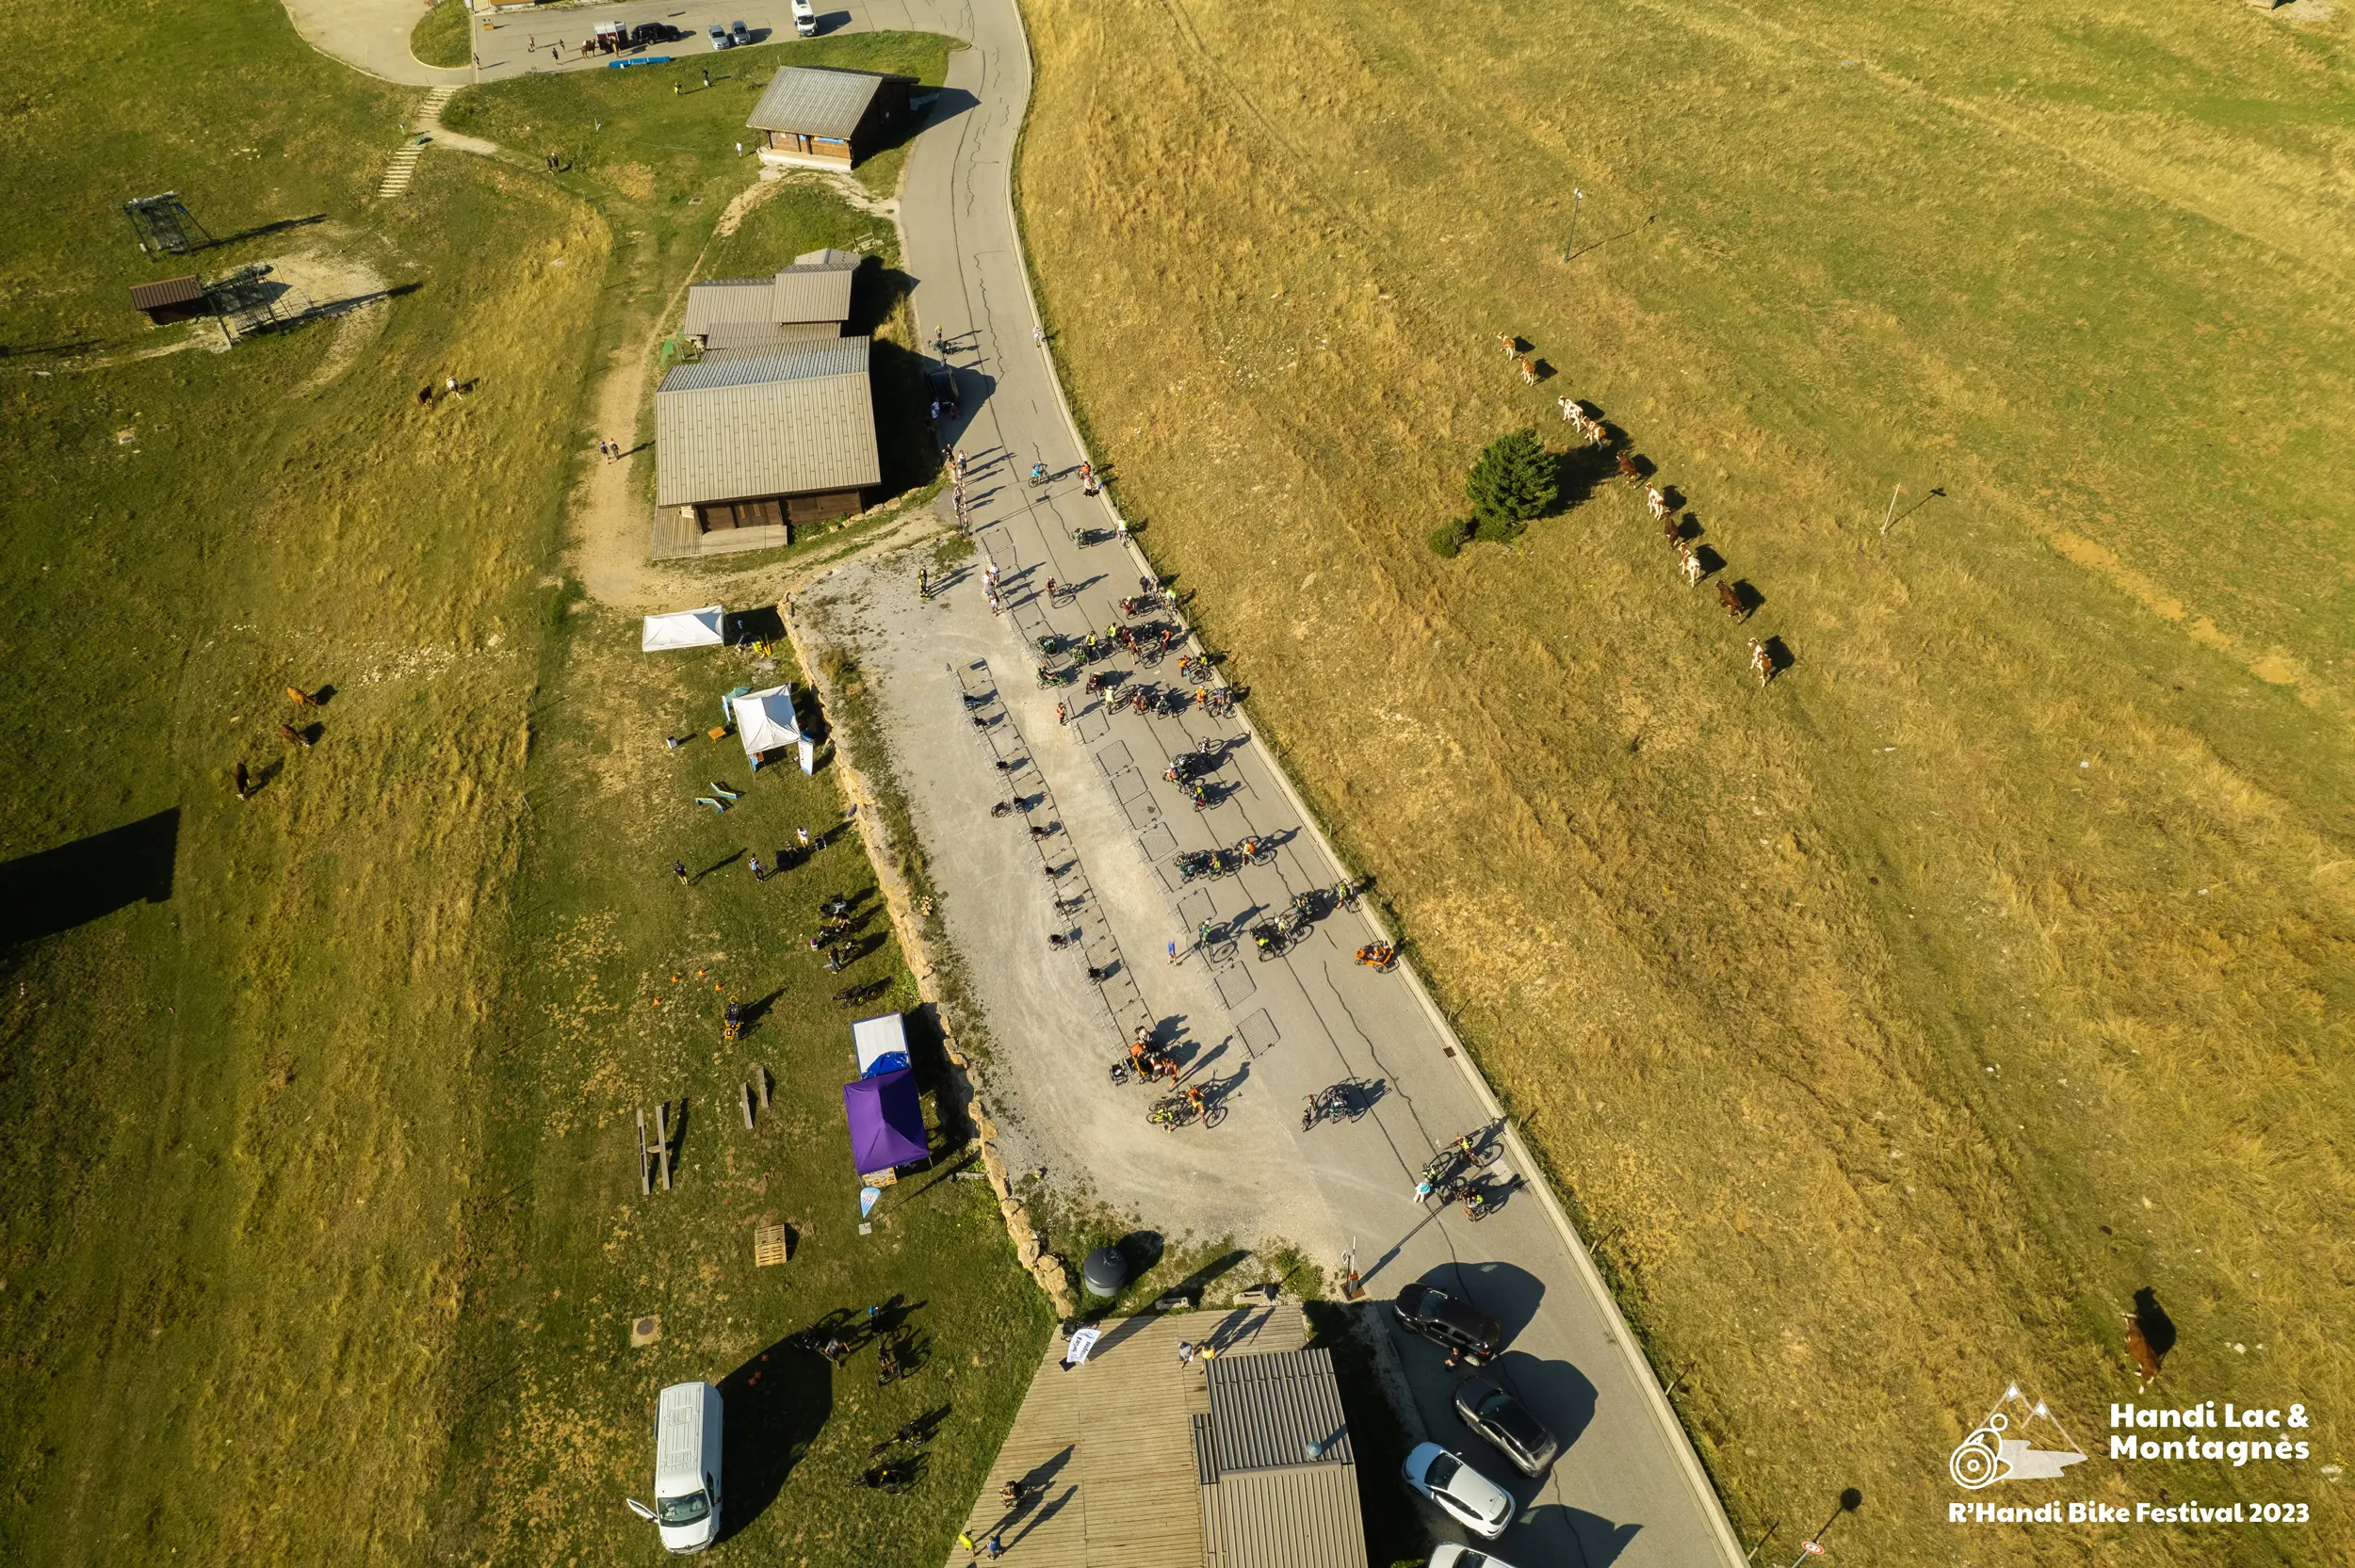 Vue aérienne du village R'Handi Bike Festival 2023 au Semnoz